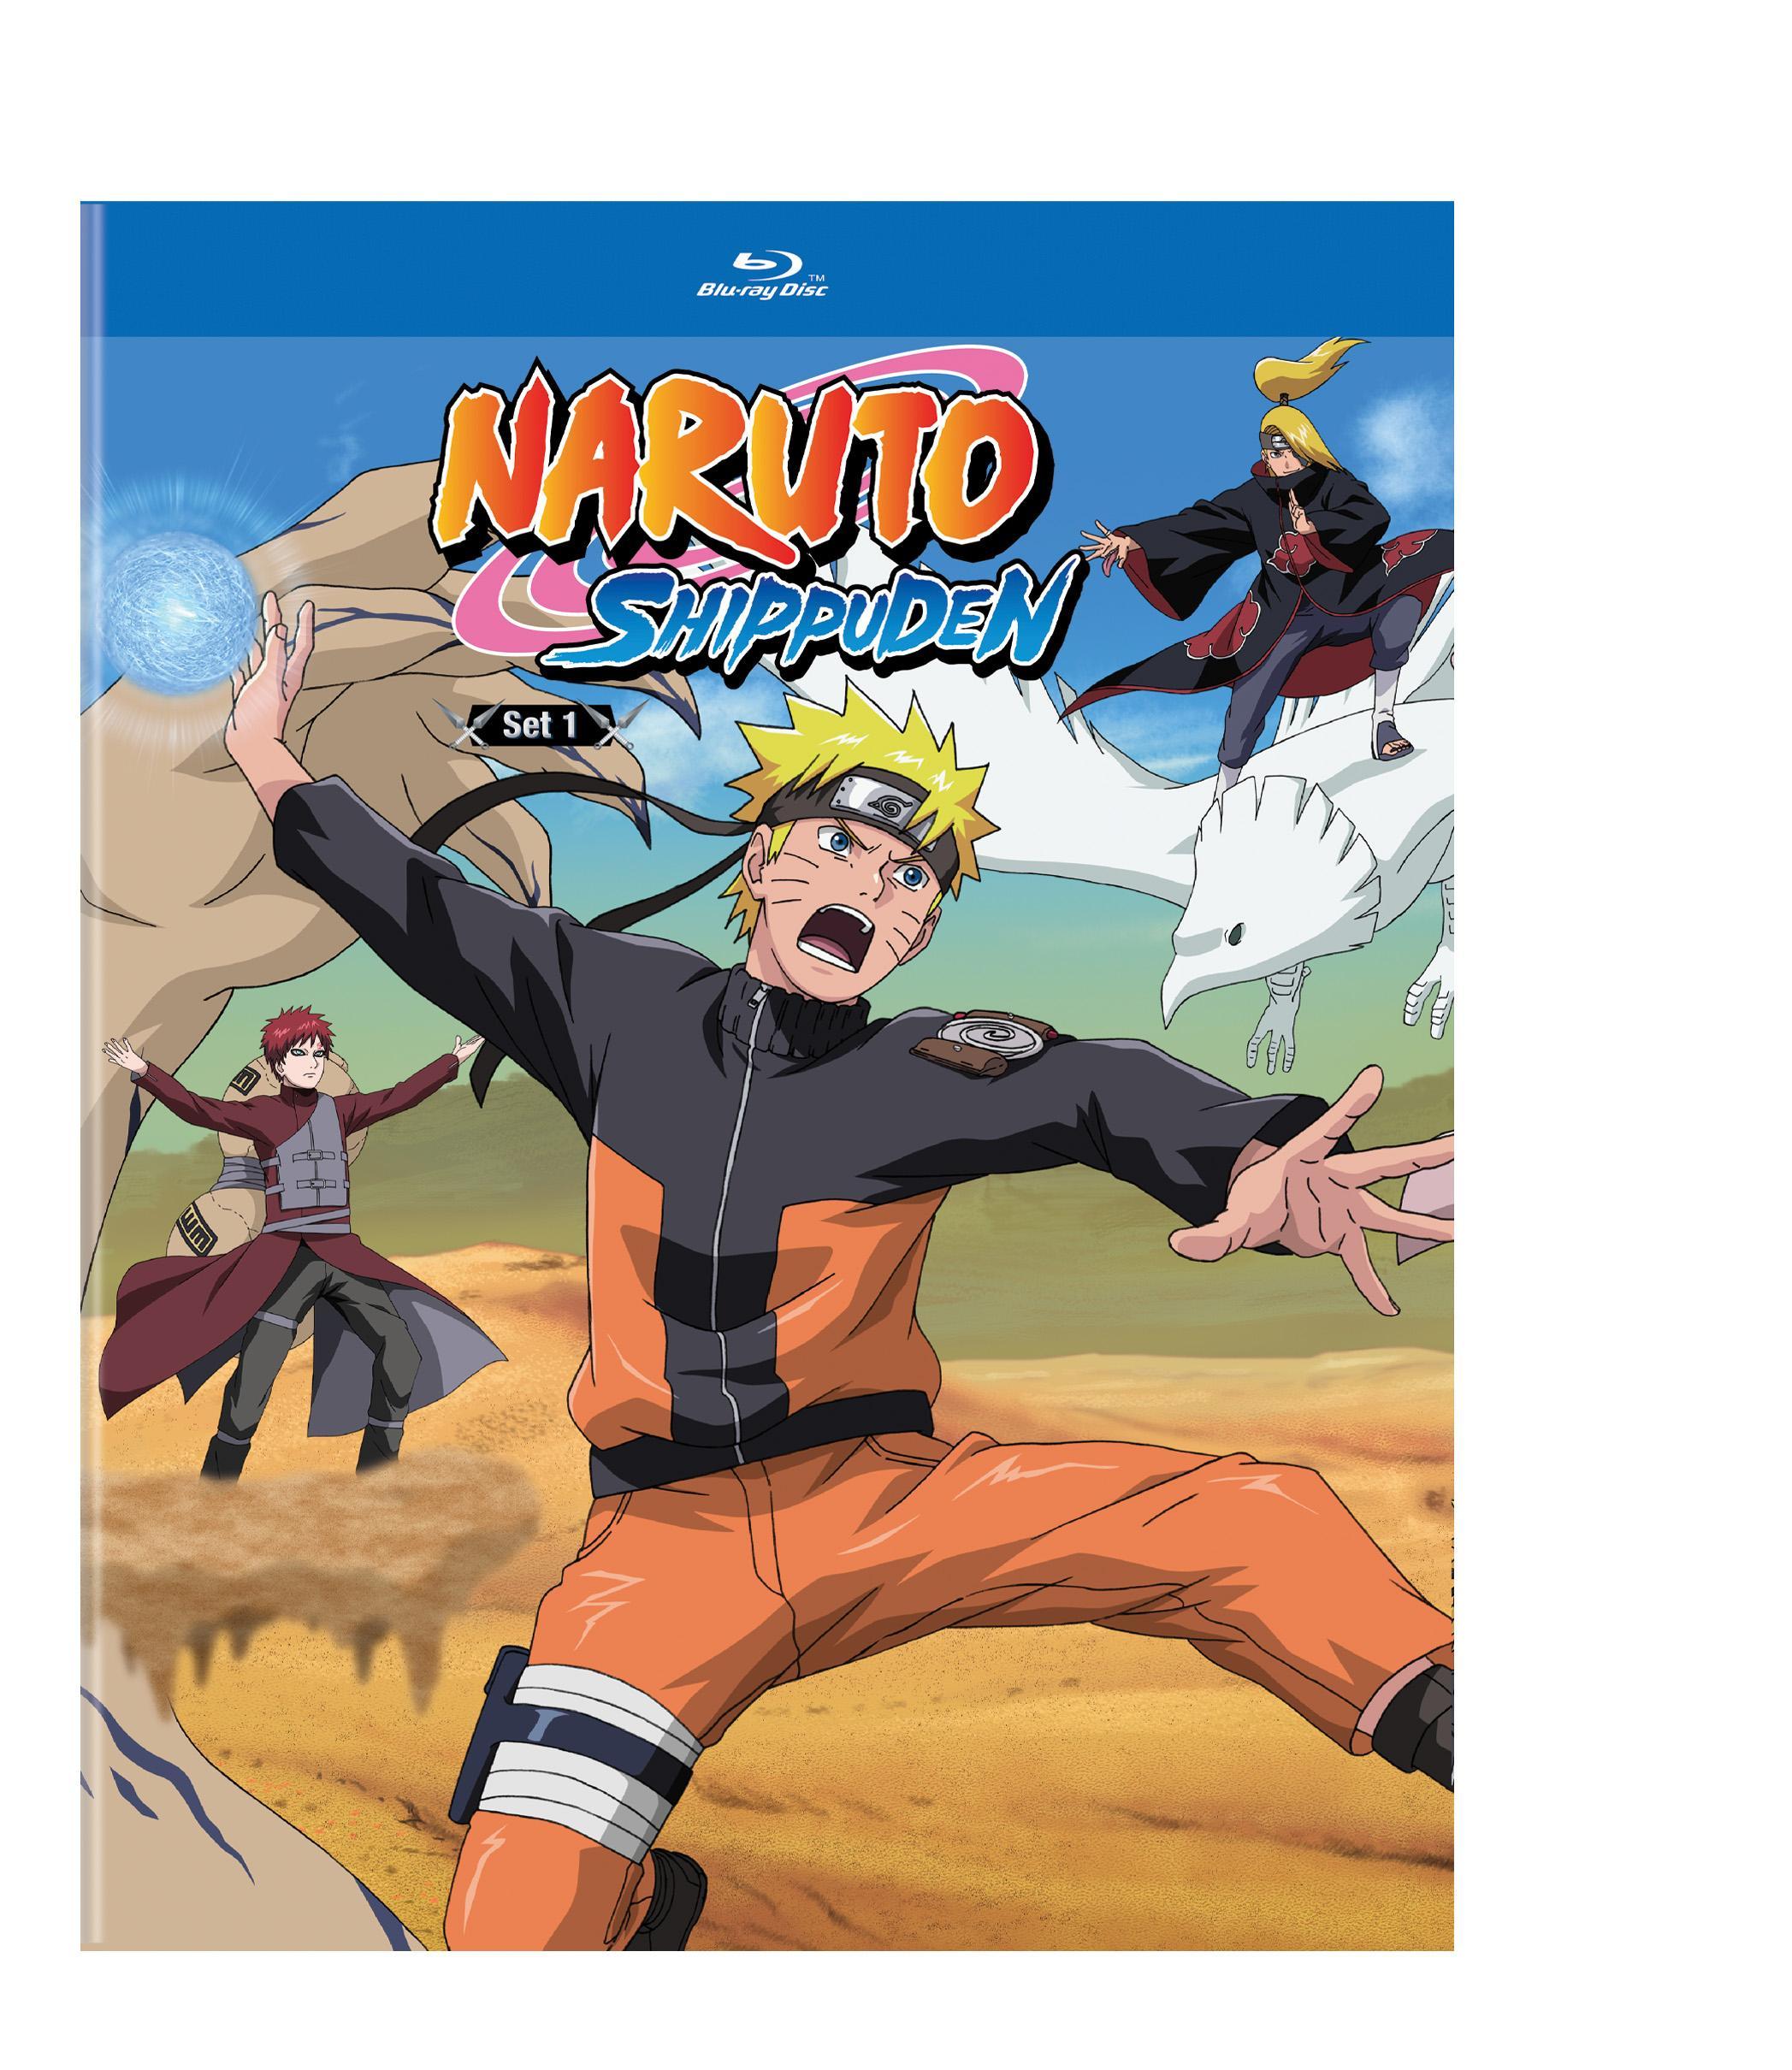 Naruto Shippuden Set 1 (Box Set) - Blu-ray